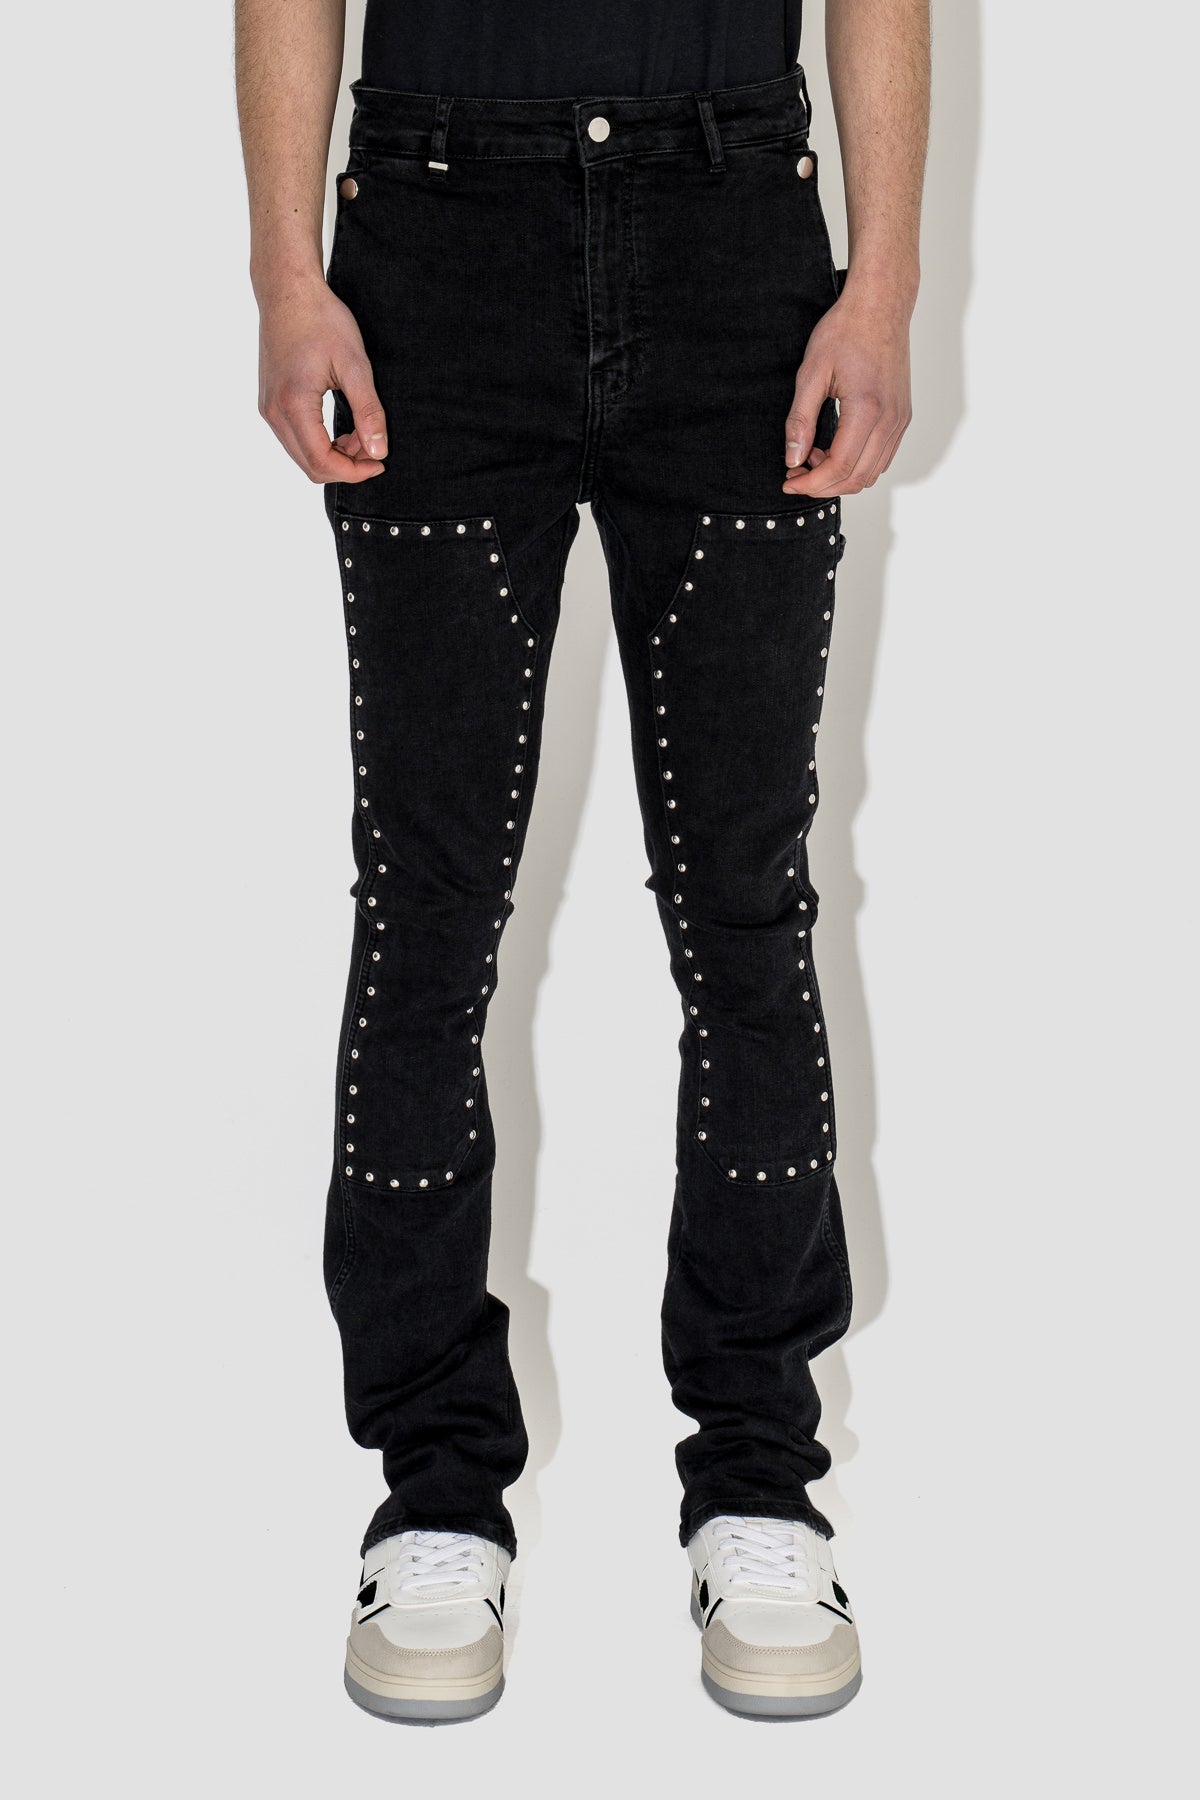 Studded Bootcut Flared Carpenter Jeans in Black Denim